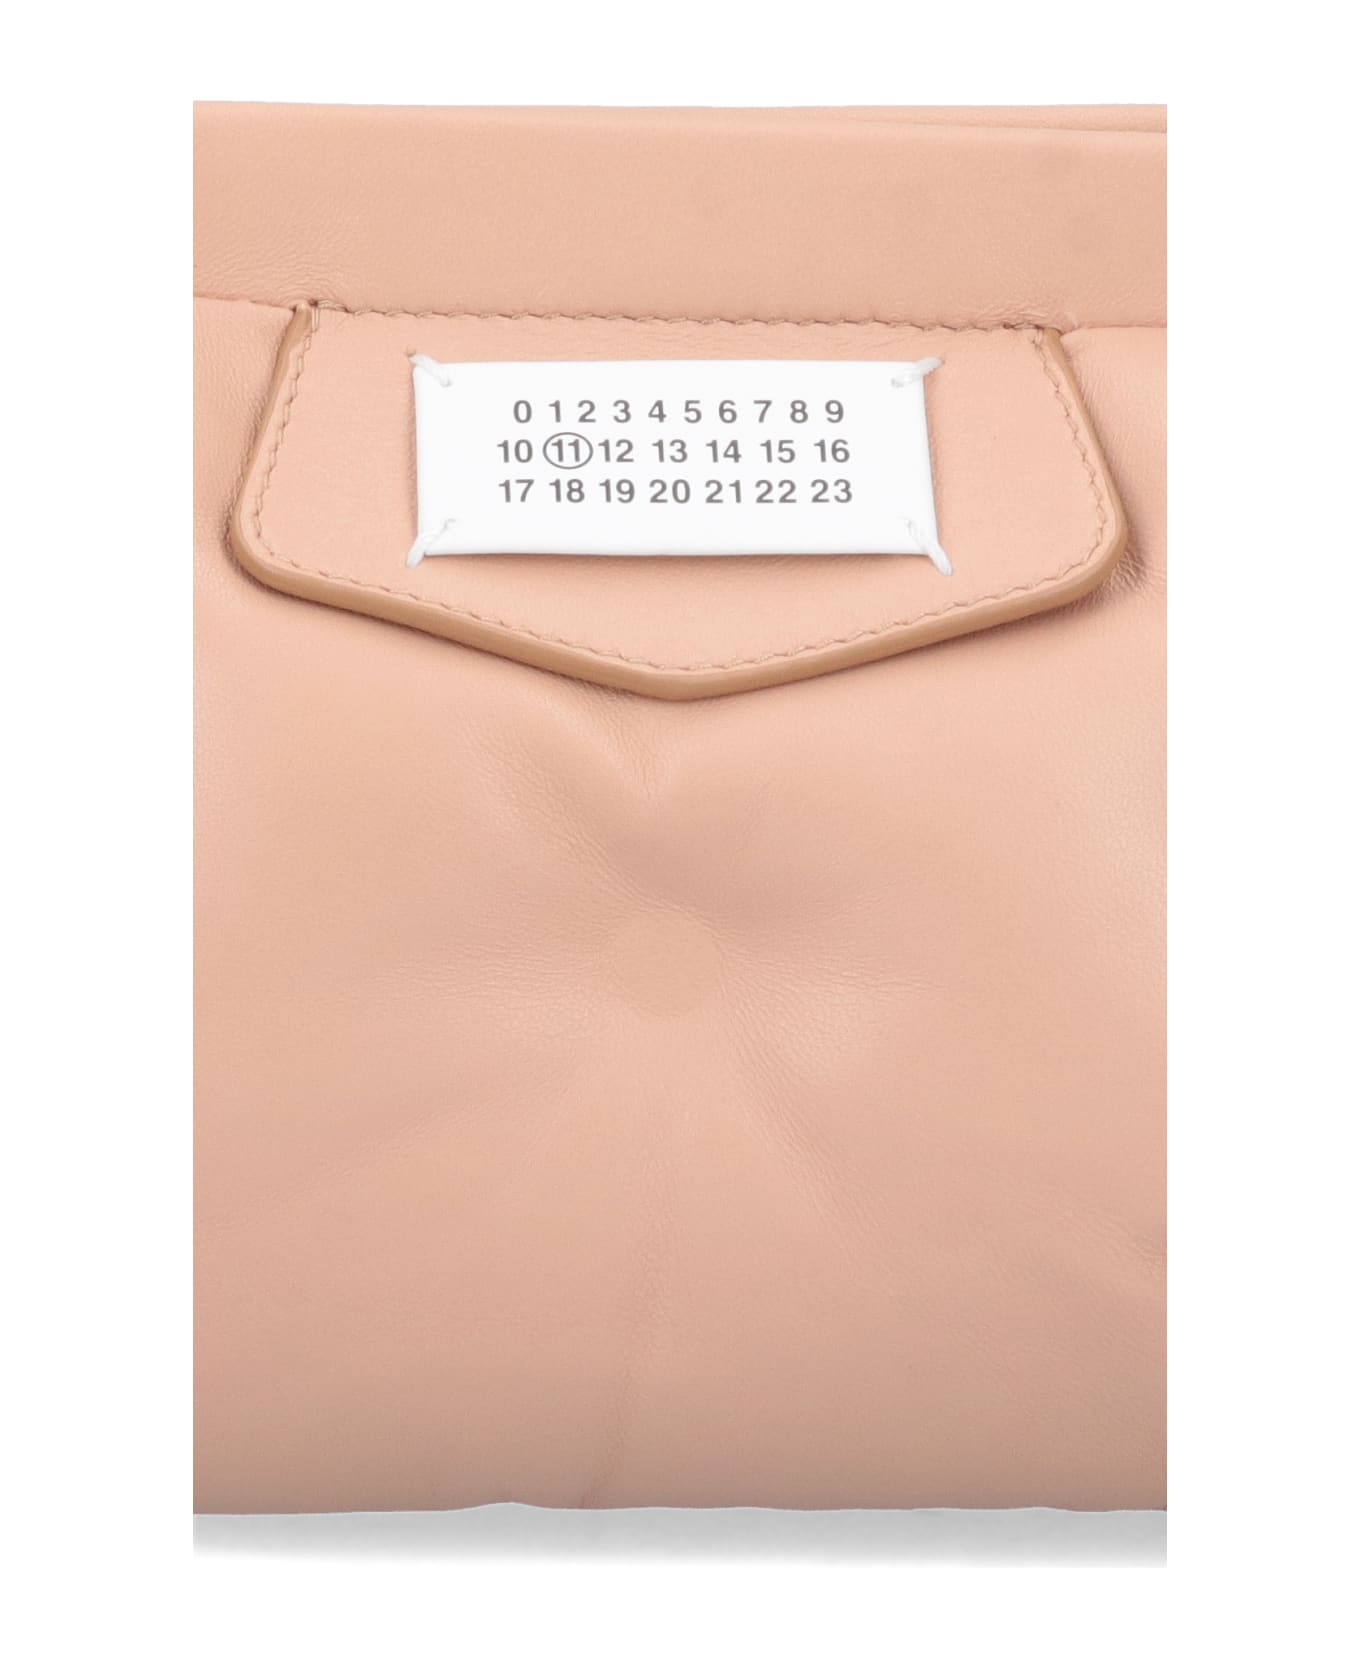 Maison Margiela Top Zip Shoulder Bag - T2057